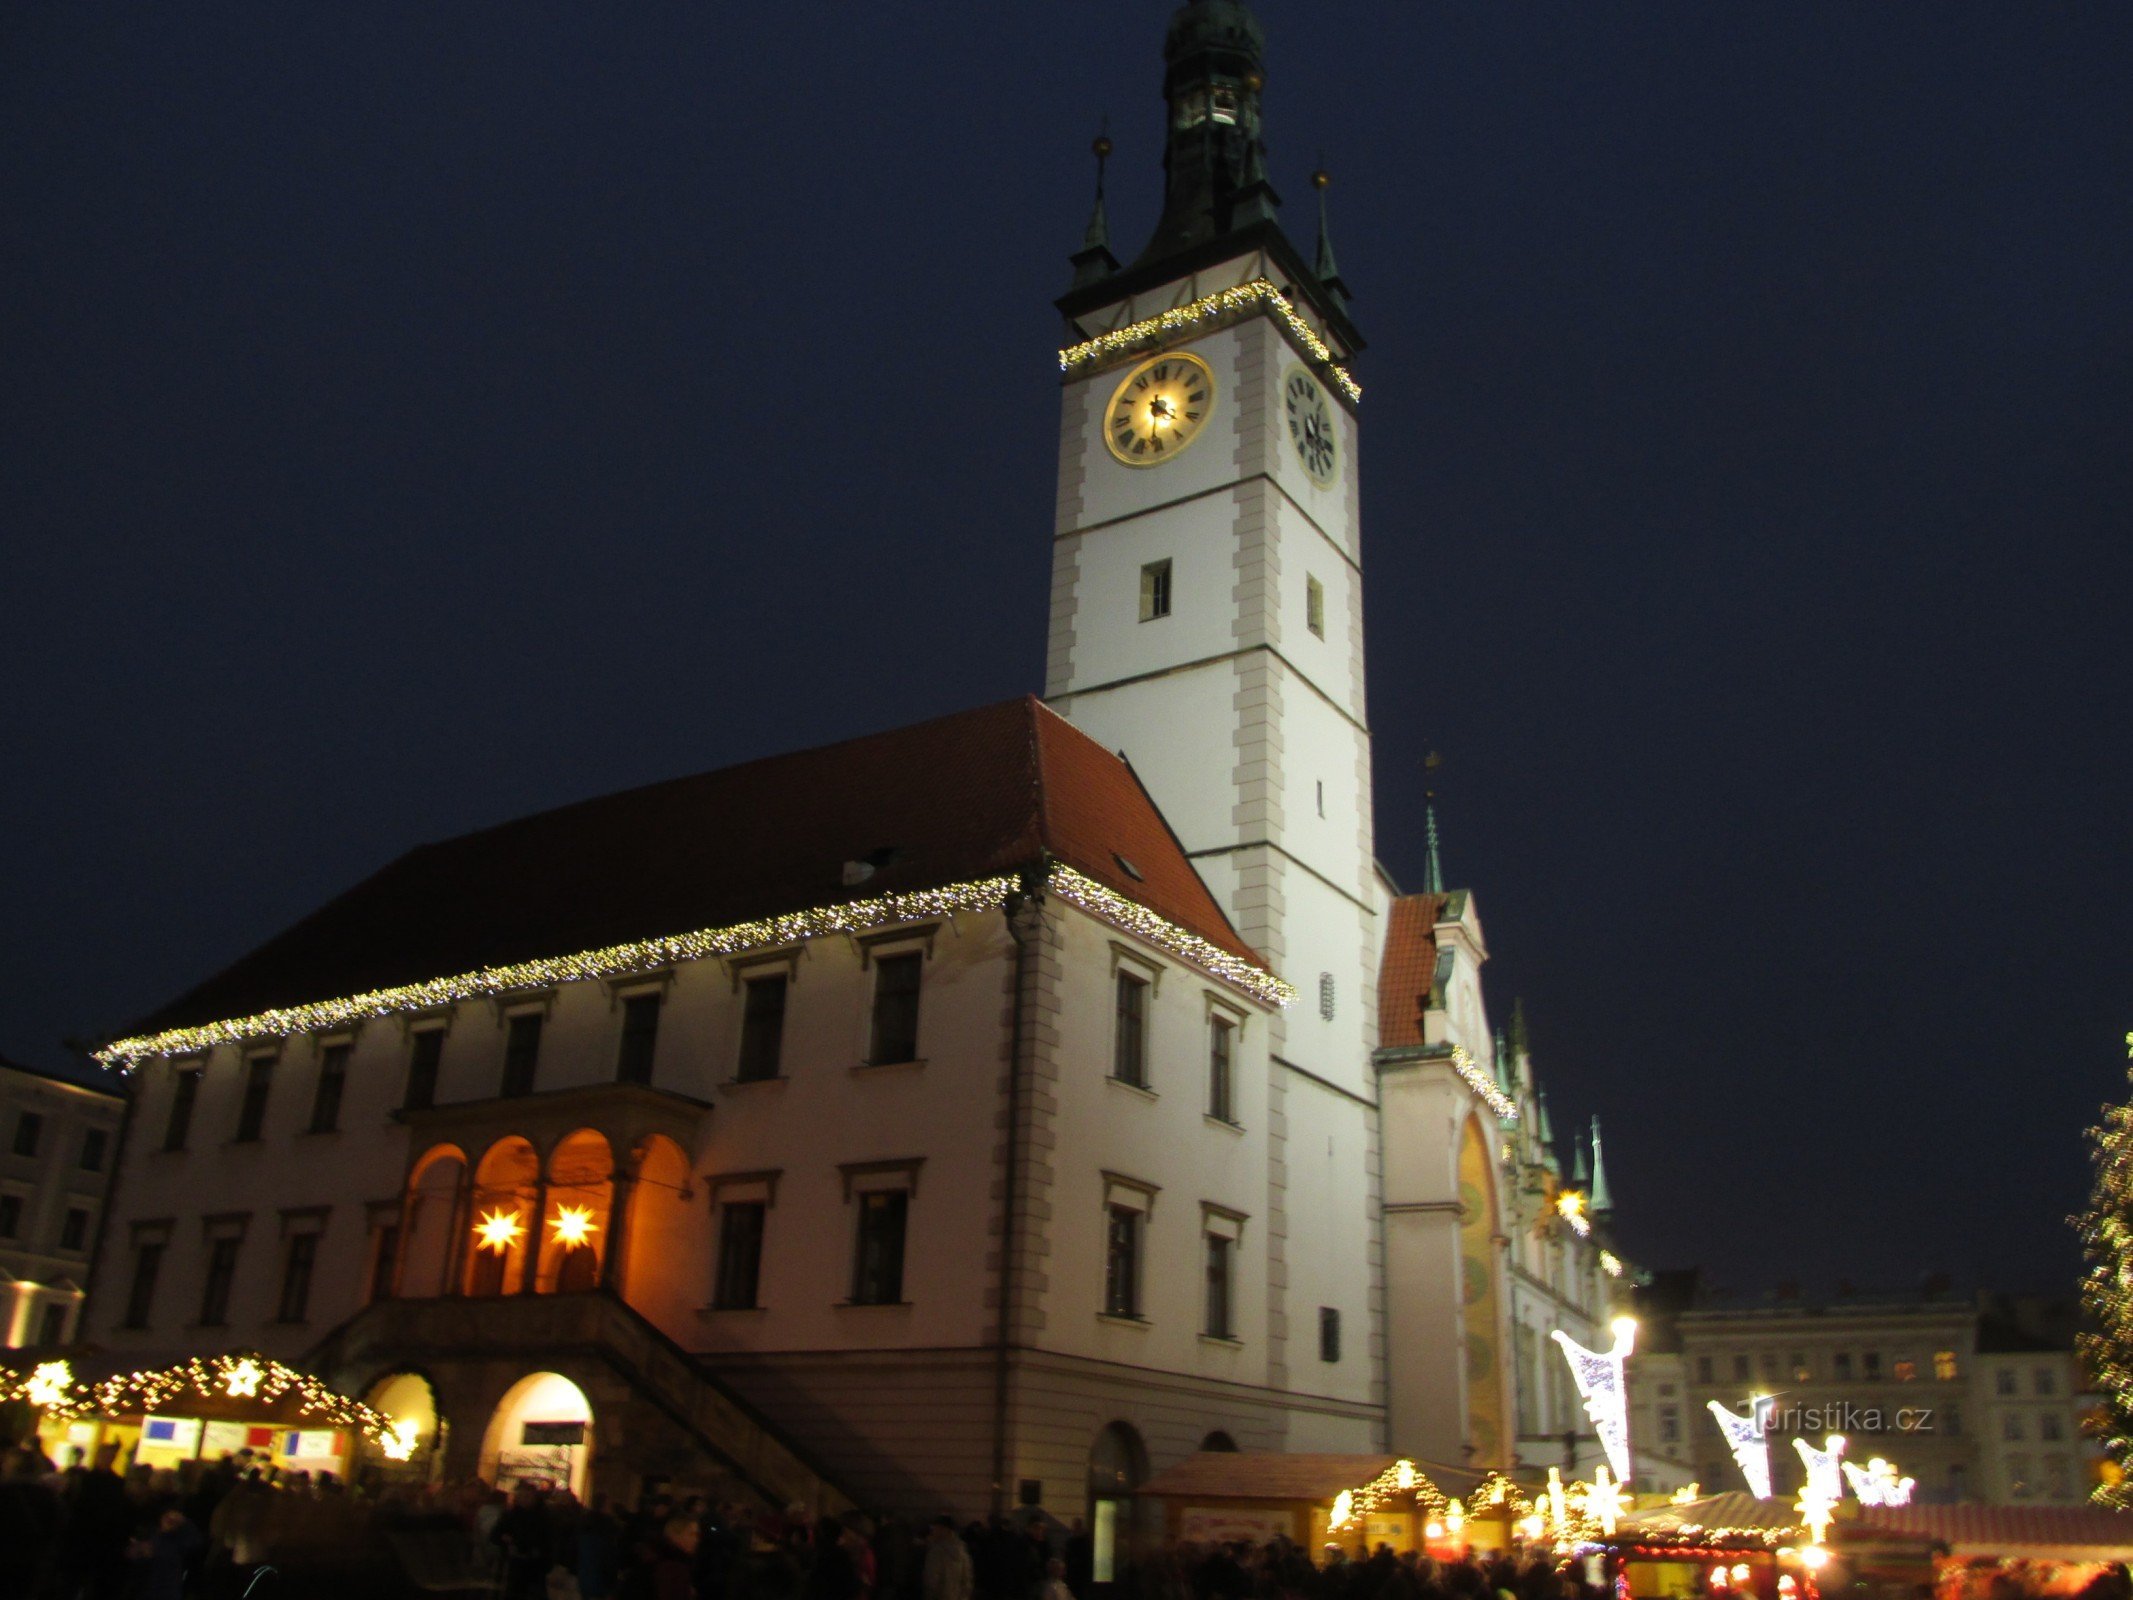 Đến chợ Advent ở Olomouc